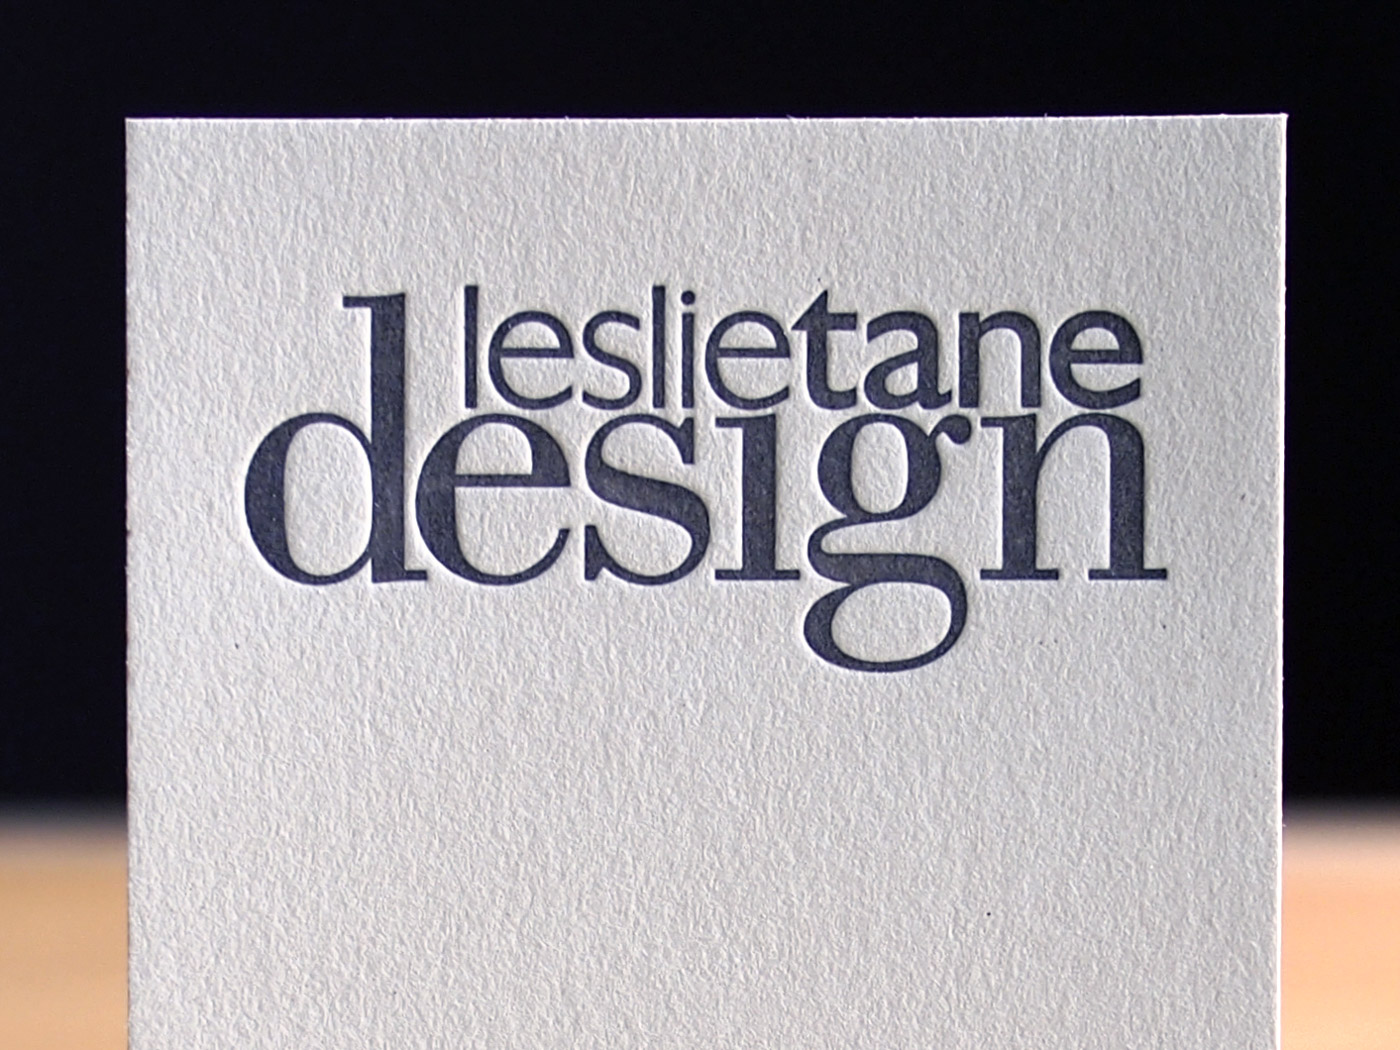 Leslie Tane Design